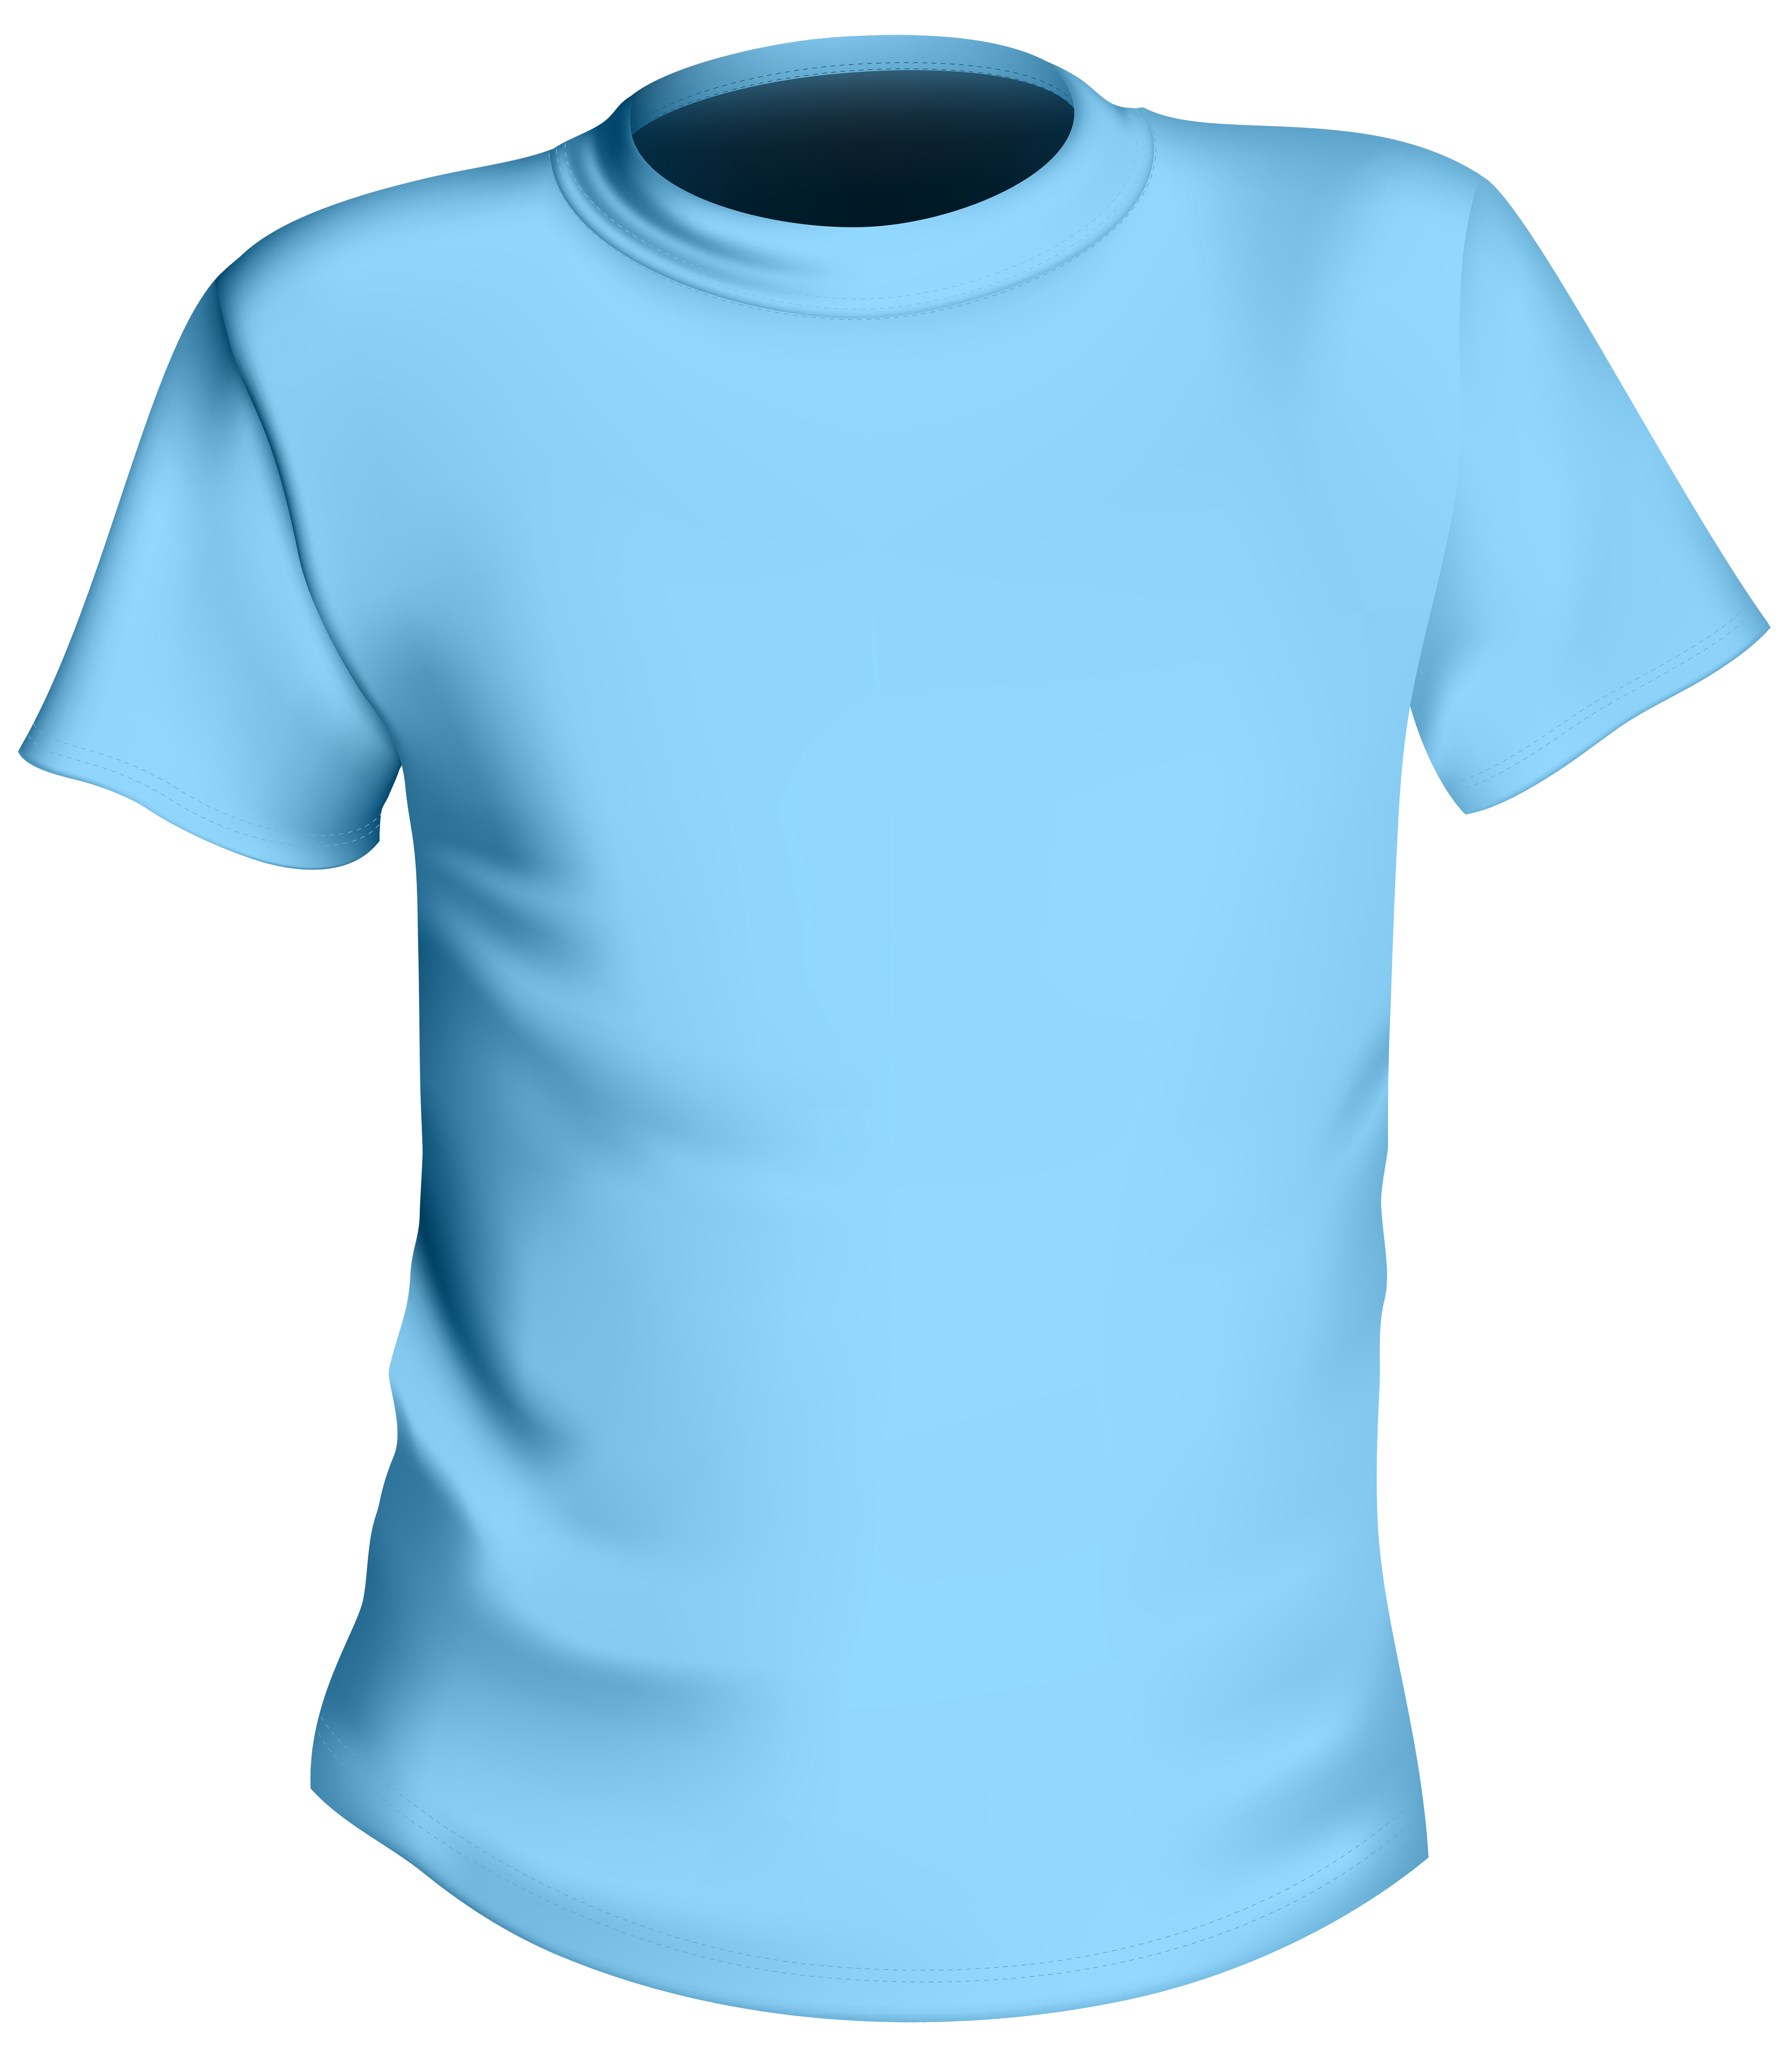 Blue Male Shirt PNG Clipart.